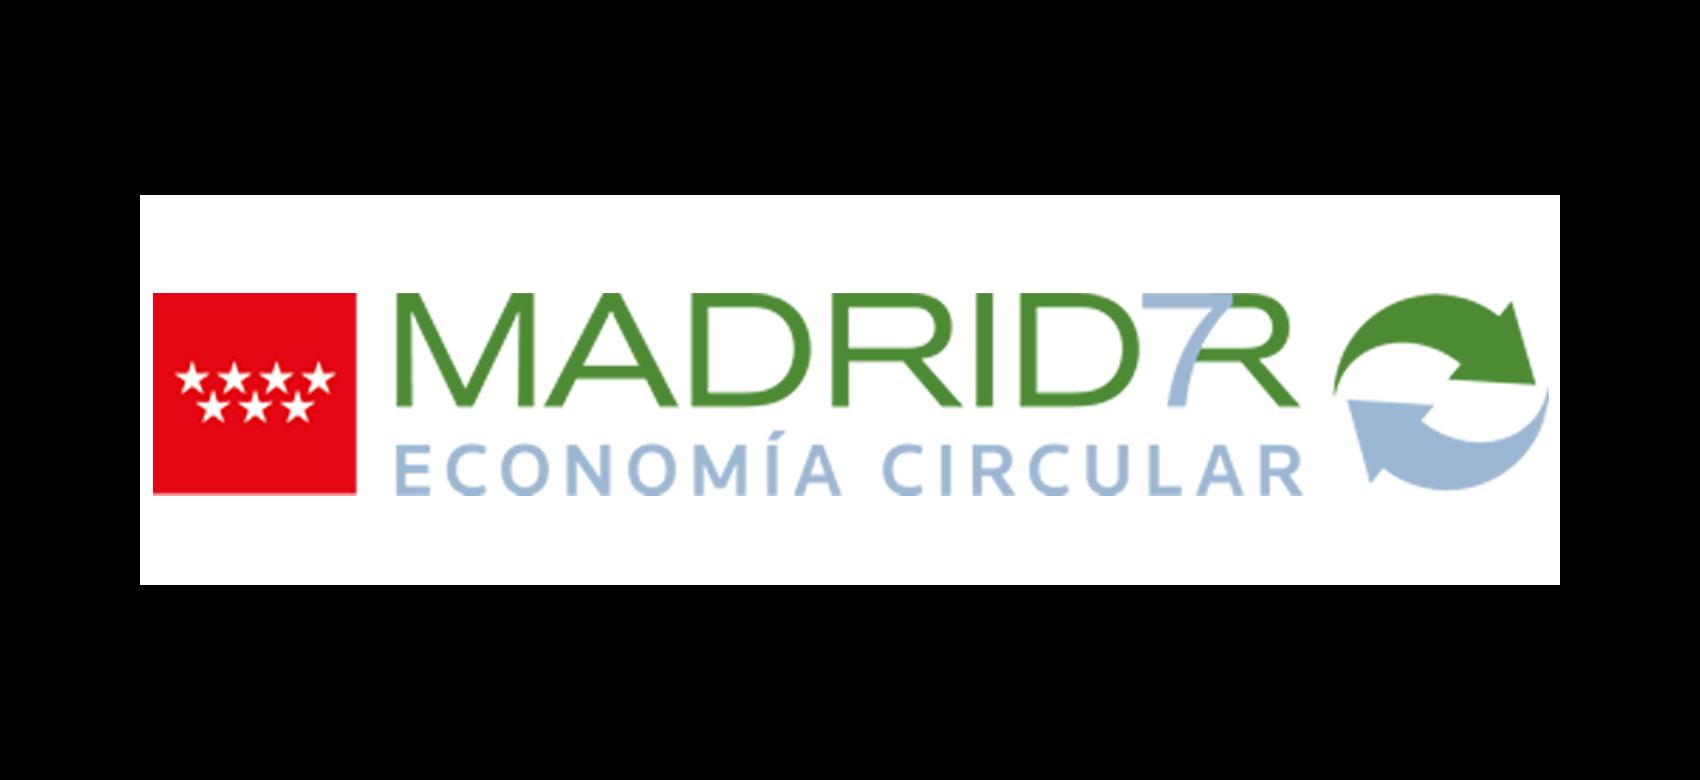 Madrid 7R Economía circular